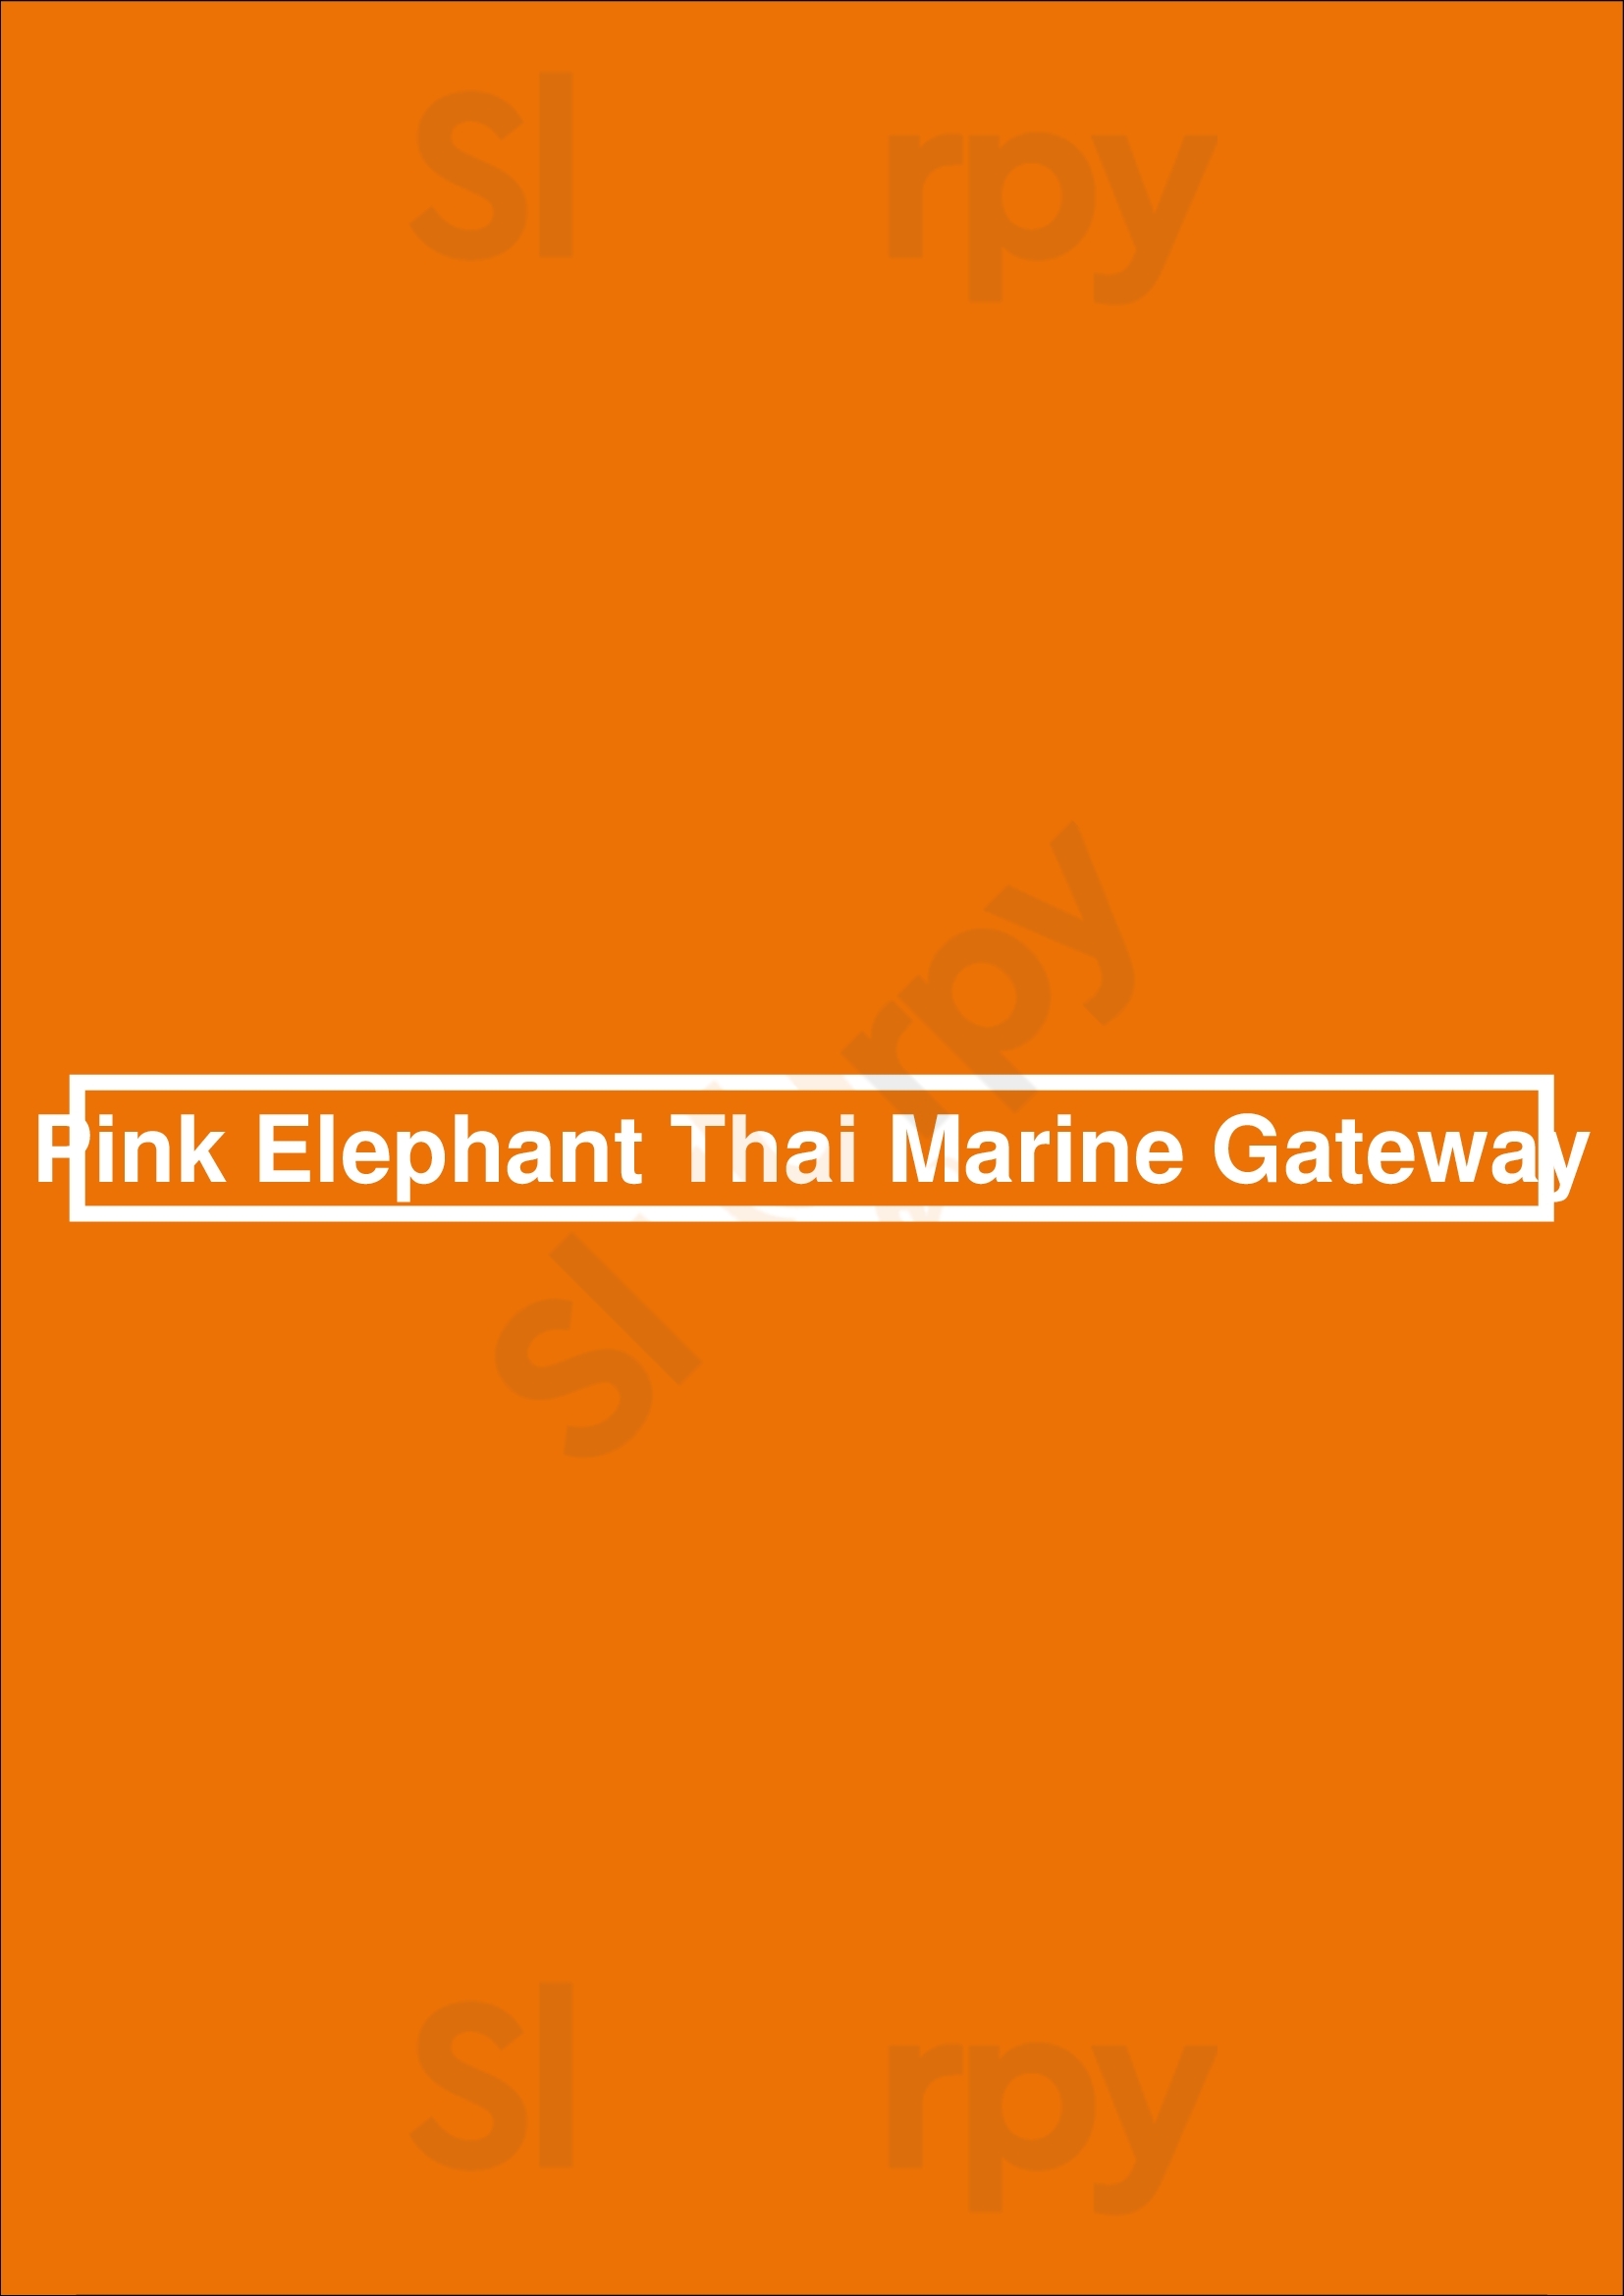 Pink Elephant Thai Marine Gateway Vancouver Menu - 1